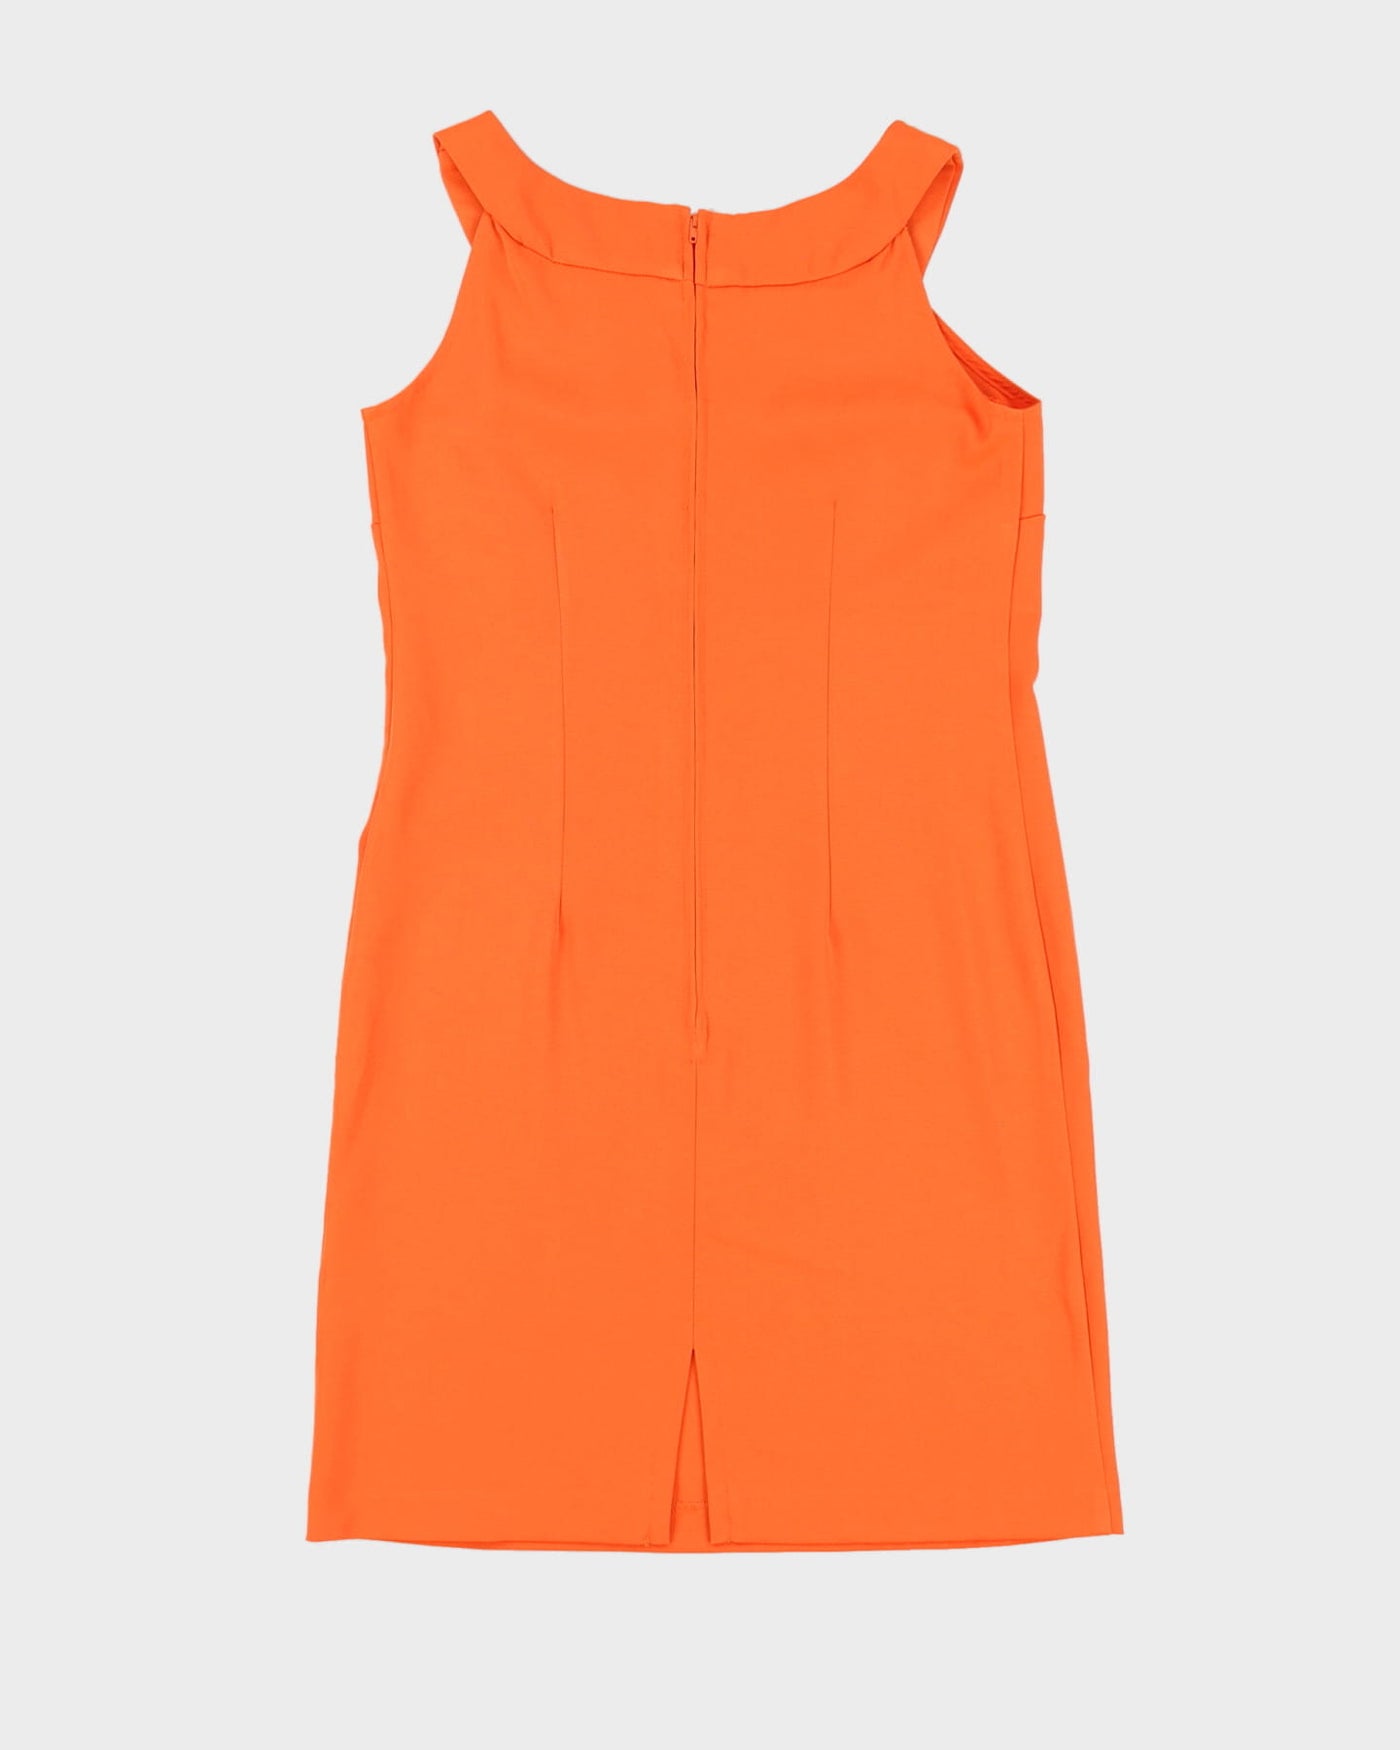 Y2K Orange Patterned Shift Dress - XS